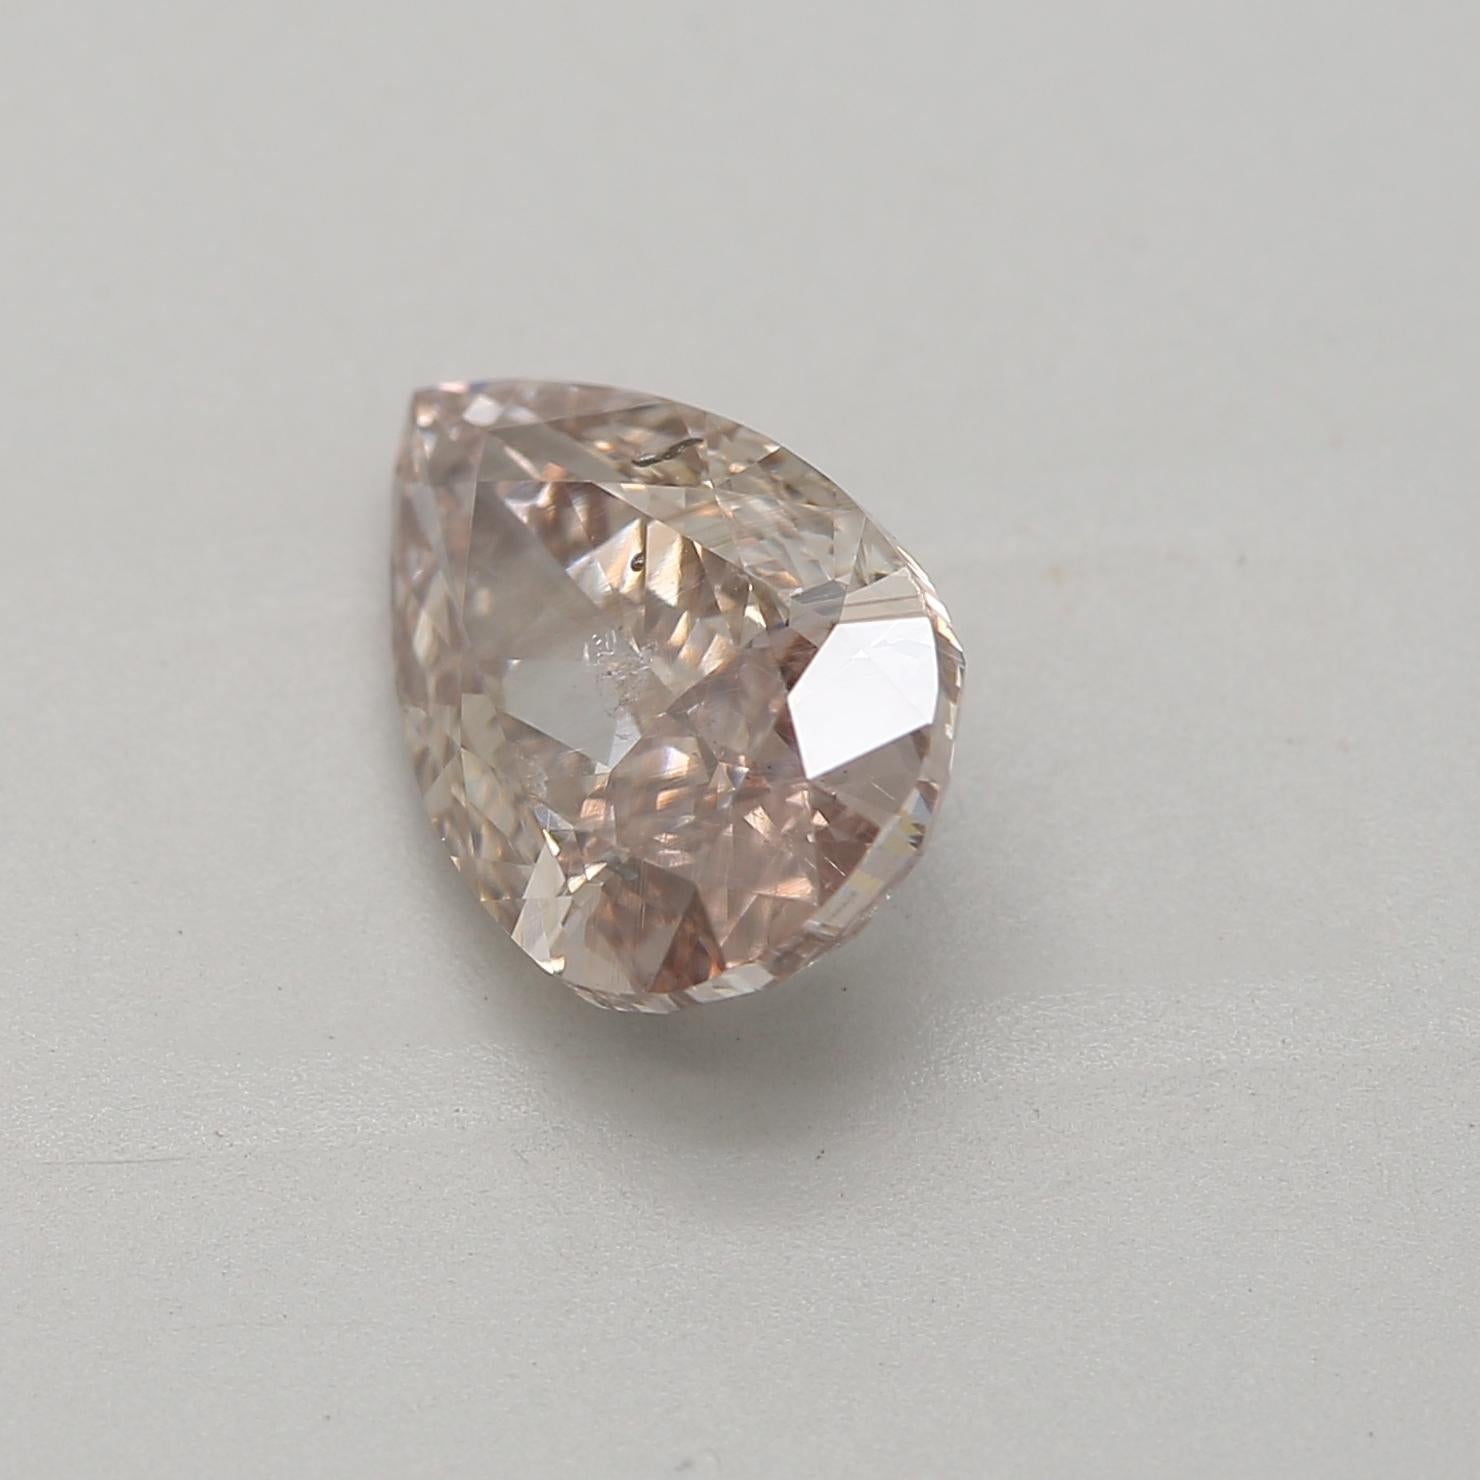 Pear Cut 1.32 Carat Fancy Pink Brown Pear cut diamond I1 Clarity GIA Certified For Sale